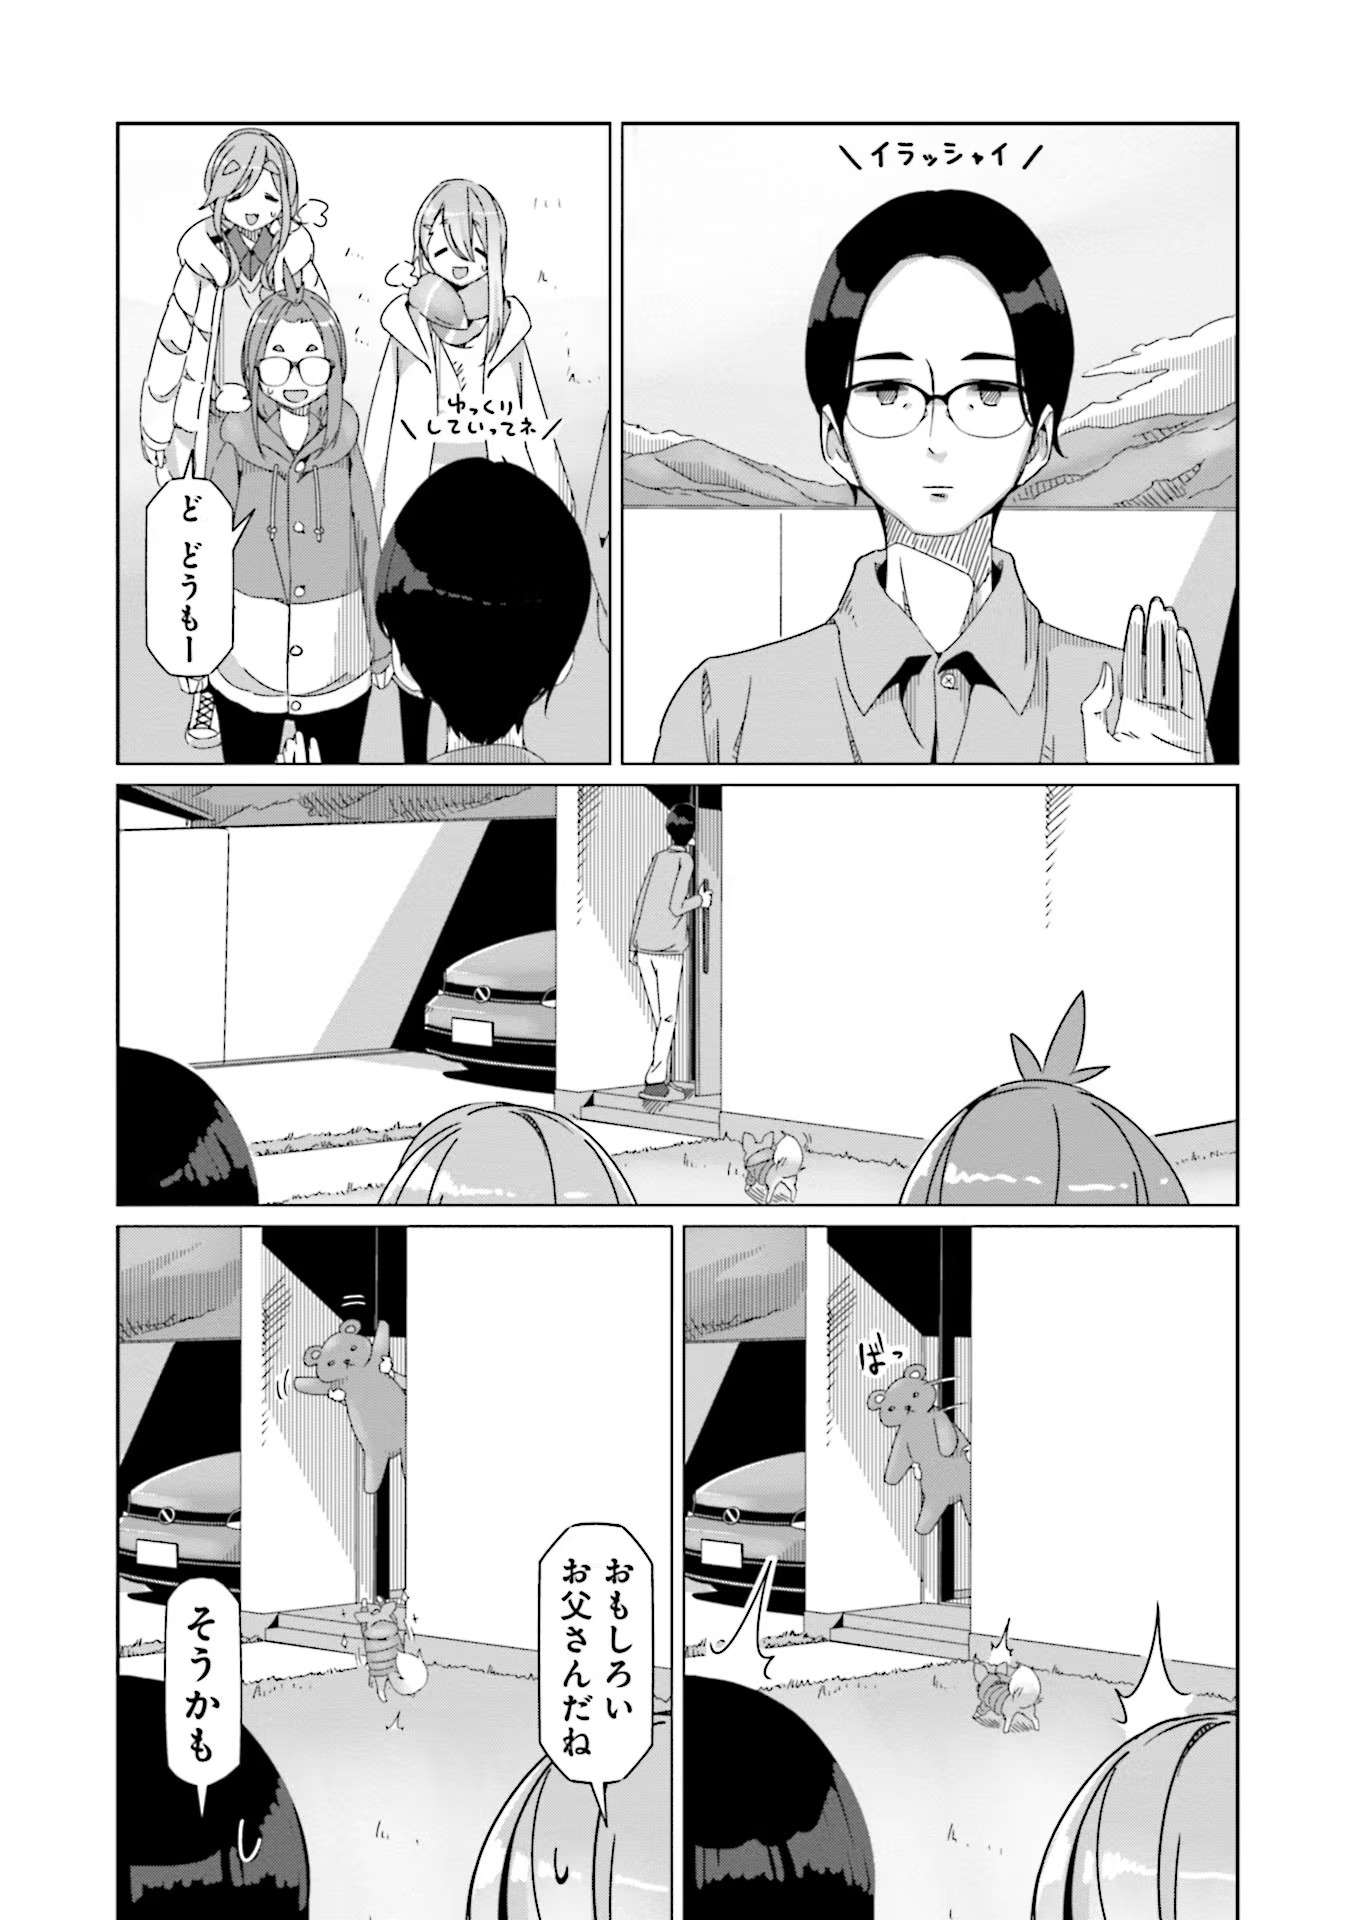 Yuru Camp - Chapter 55 - Page 1